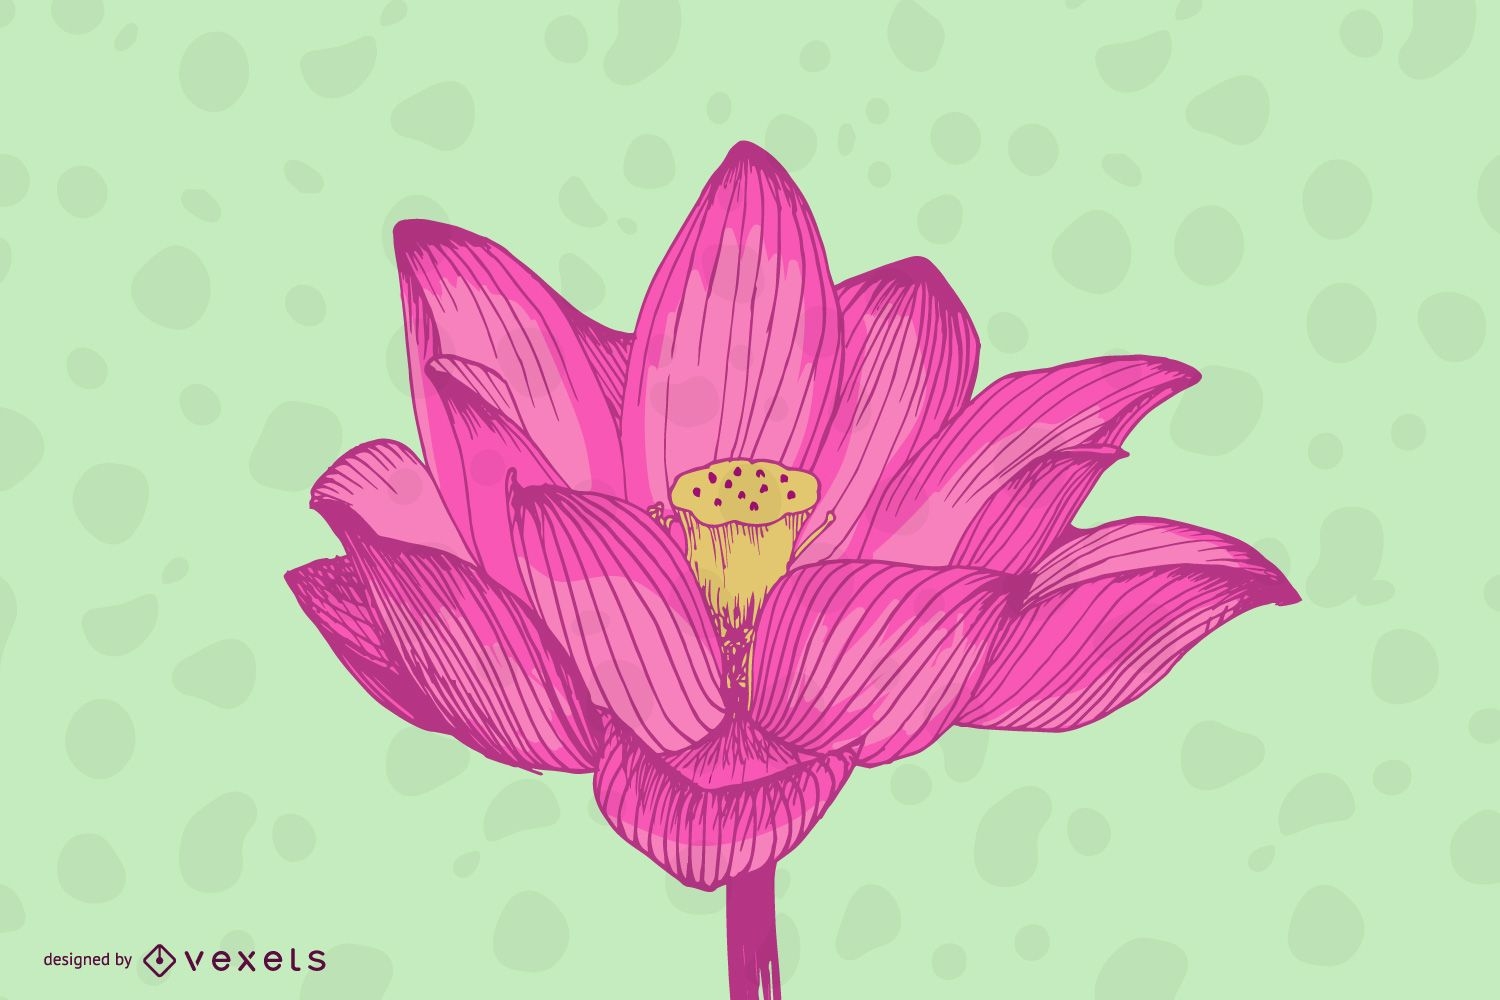 Watercolor Lotus Flower T-shirt Design Vector Download